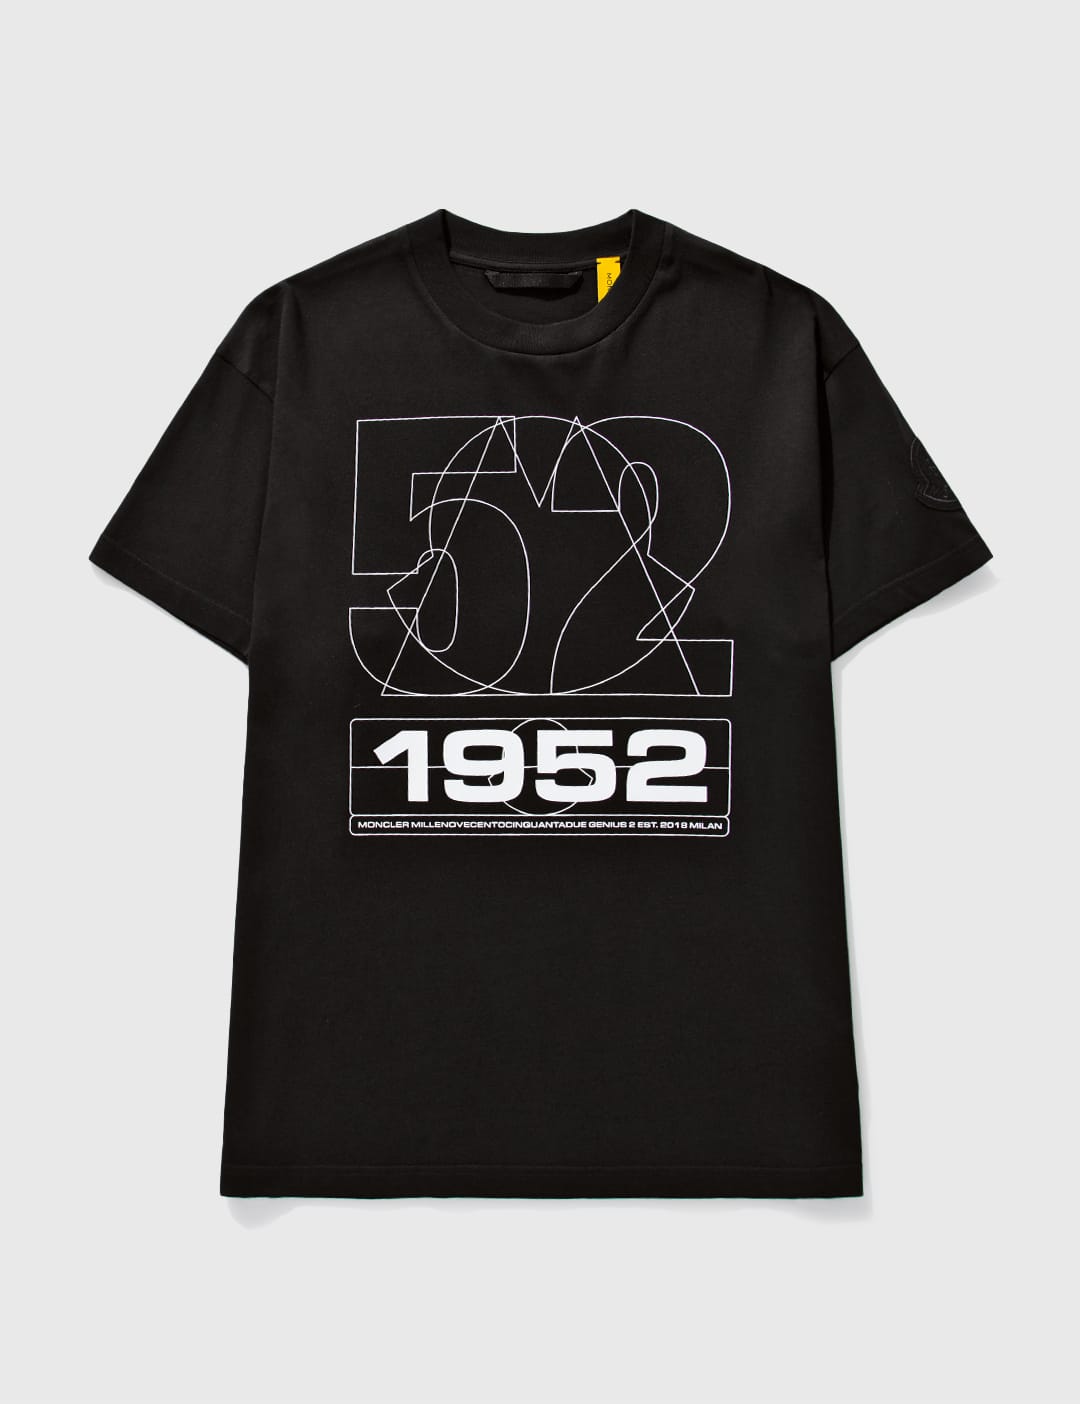 Moncler Genius - 2 モンクレール 1952 Tシャツ | HBX - ハイプ ...